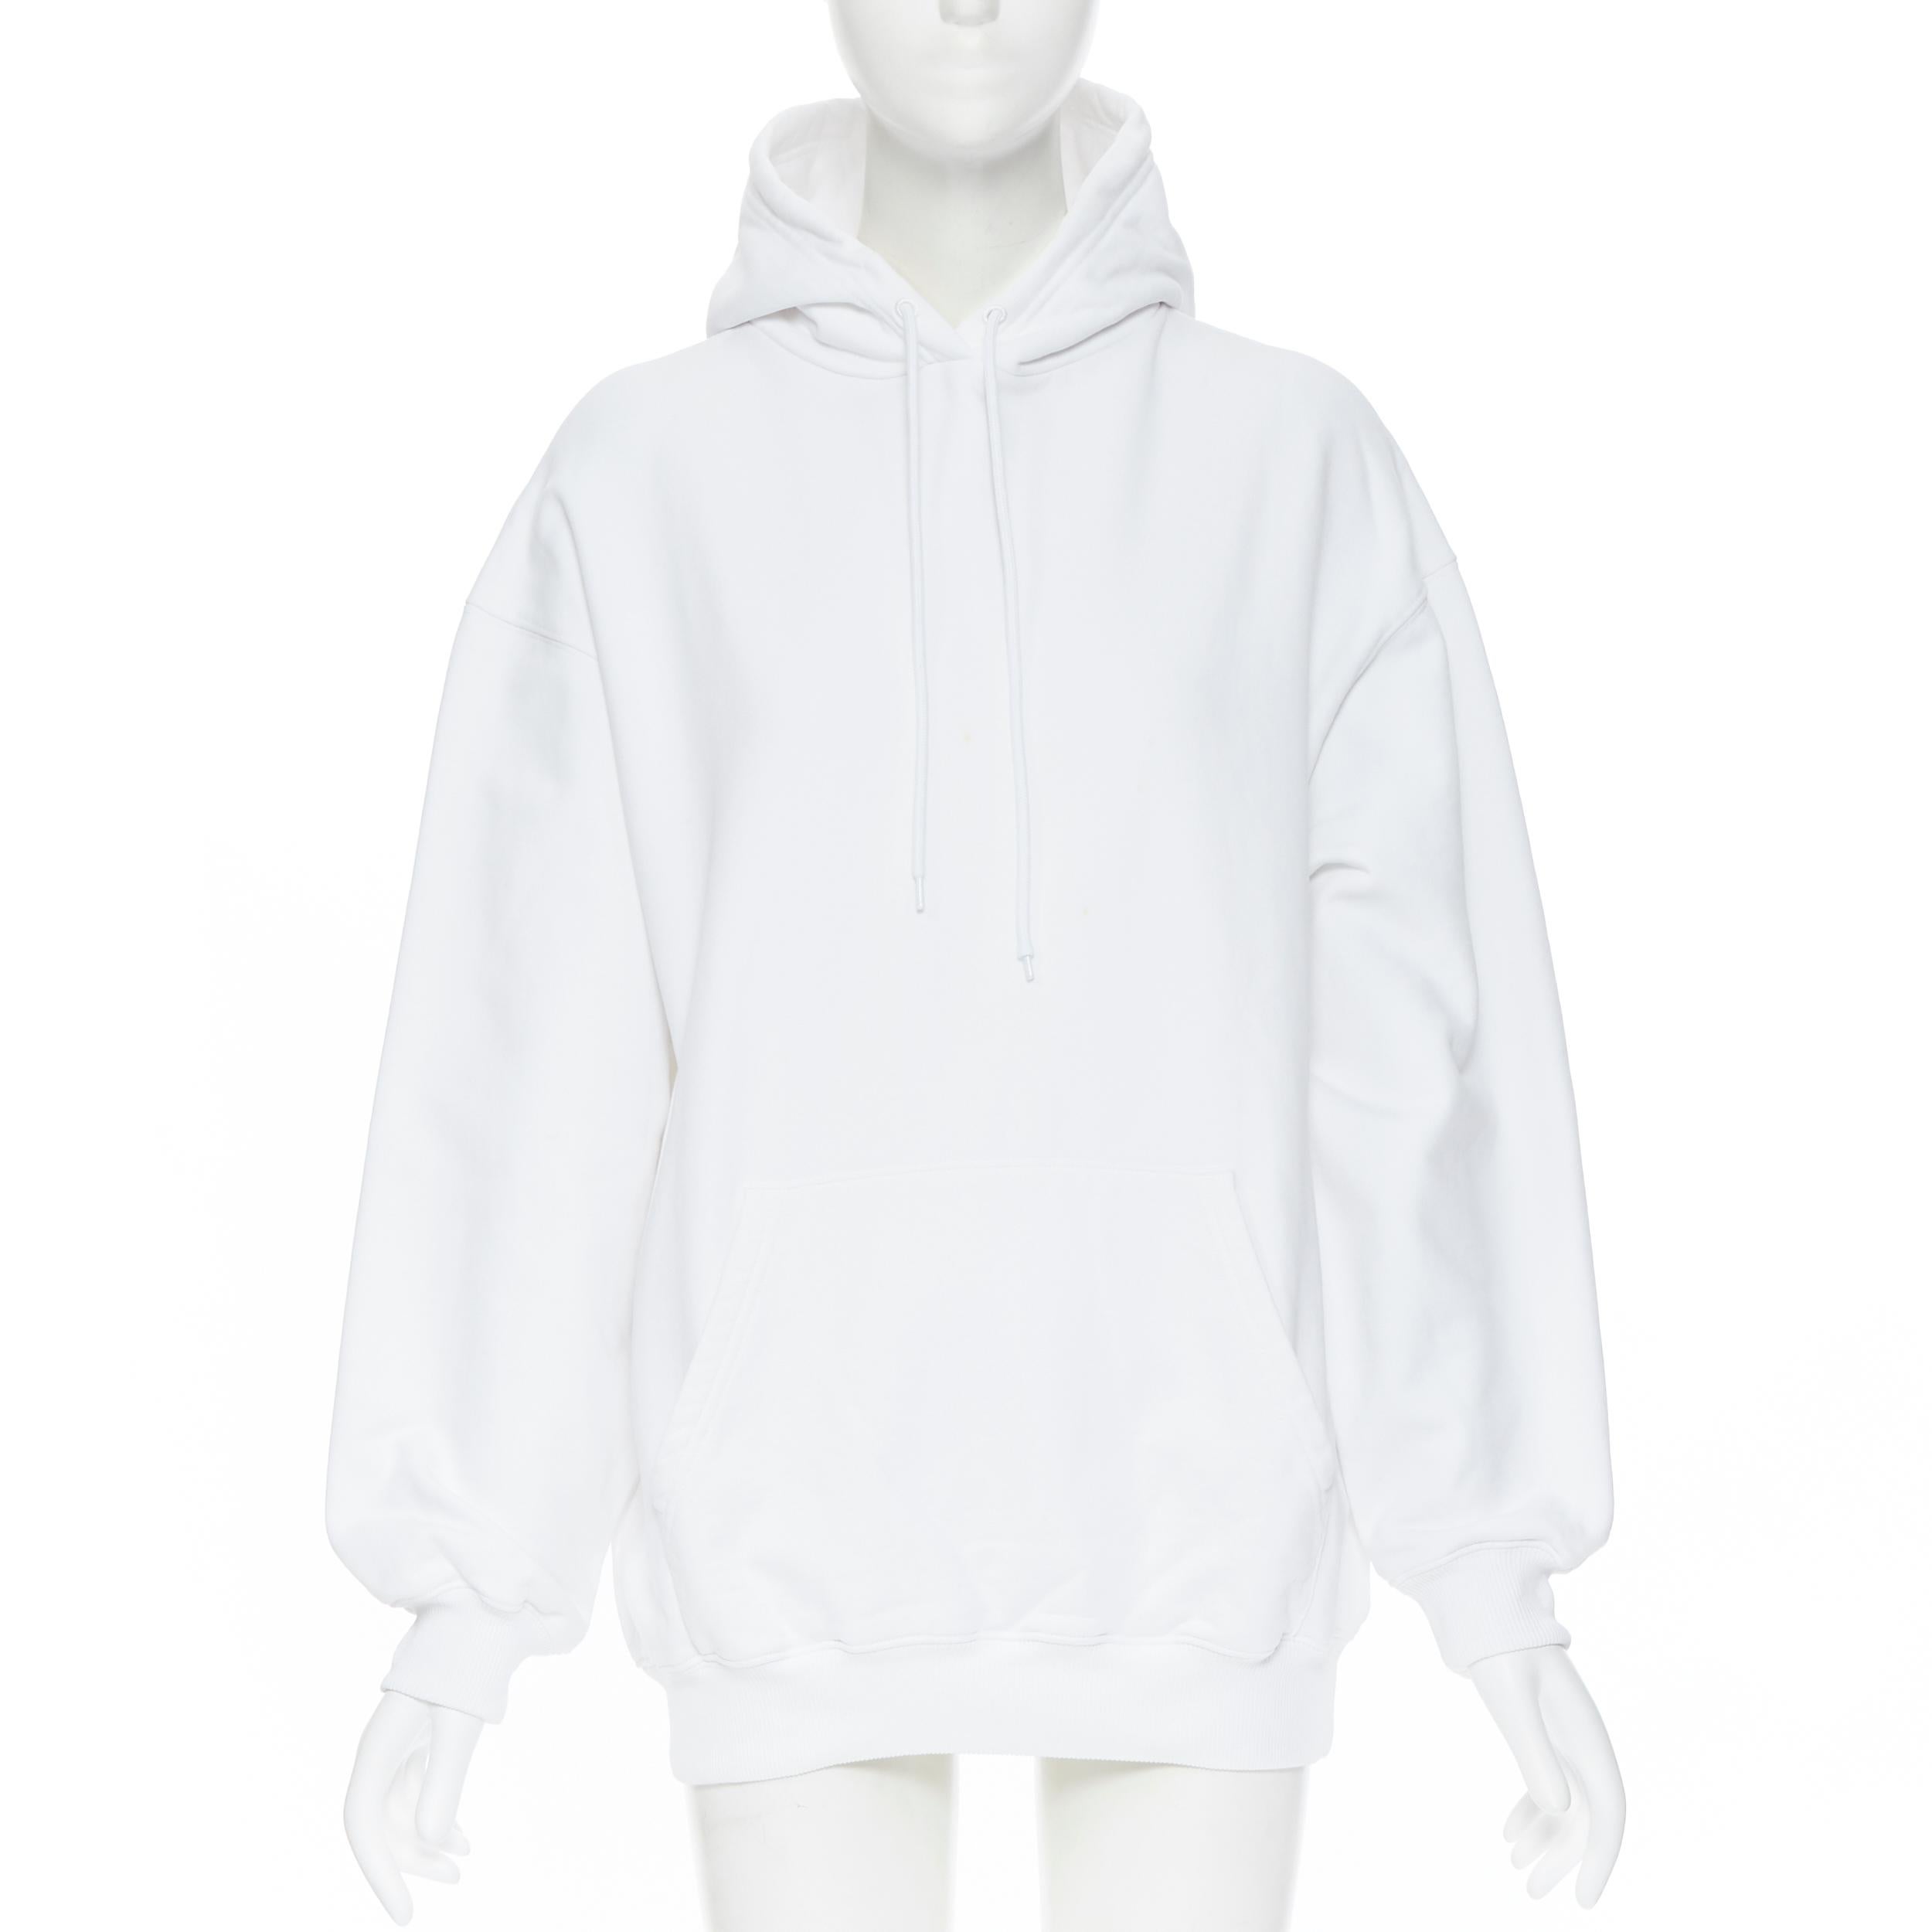 BALENCIAGA 2017 100% cotton white black logo print back oversized hoodie  XS
Brand: Balenciaga
Designer: Demna Gvasalia
Collection: 2017
Model Name / Style: Hoodie
Material: Cotton
Color: White
Pattern: Solid
Extra Detail: Drawstring. Kangaroo